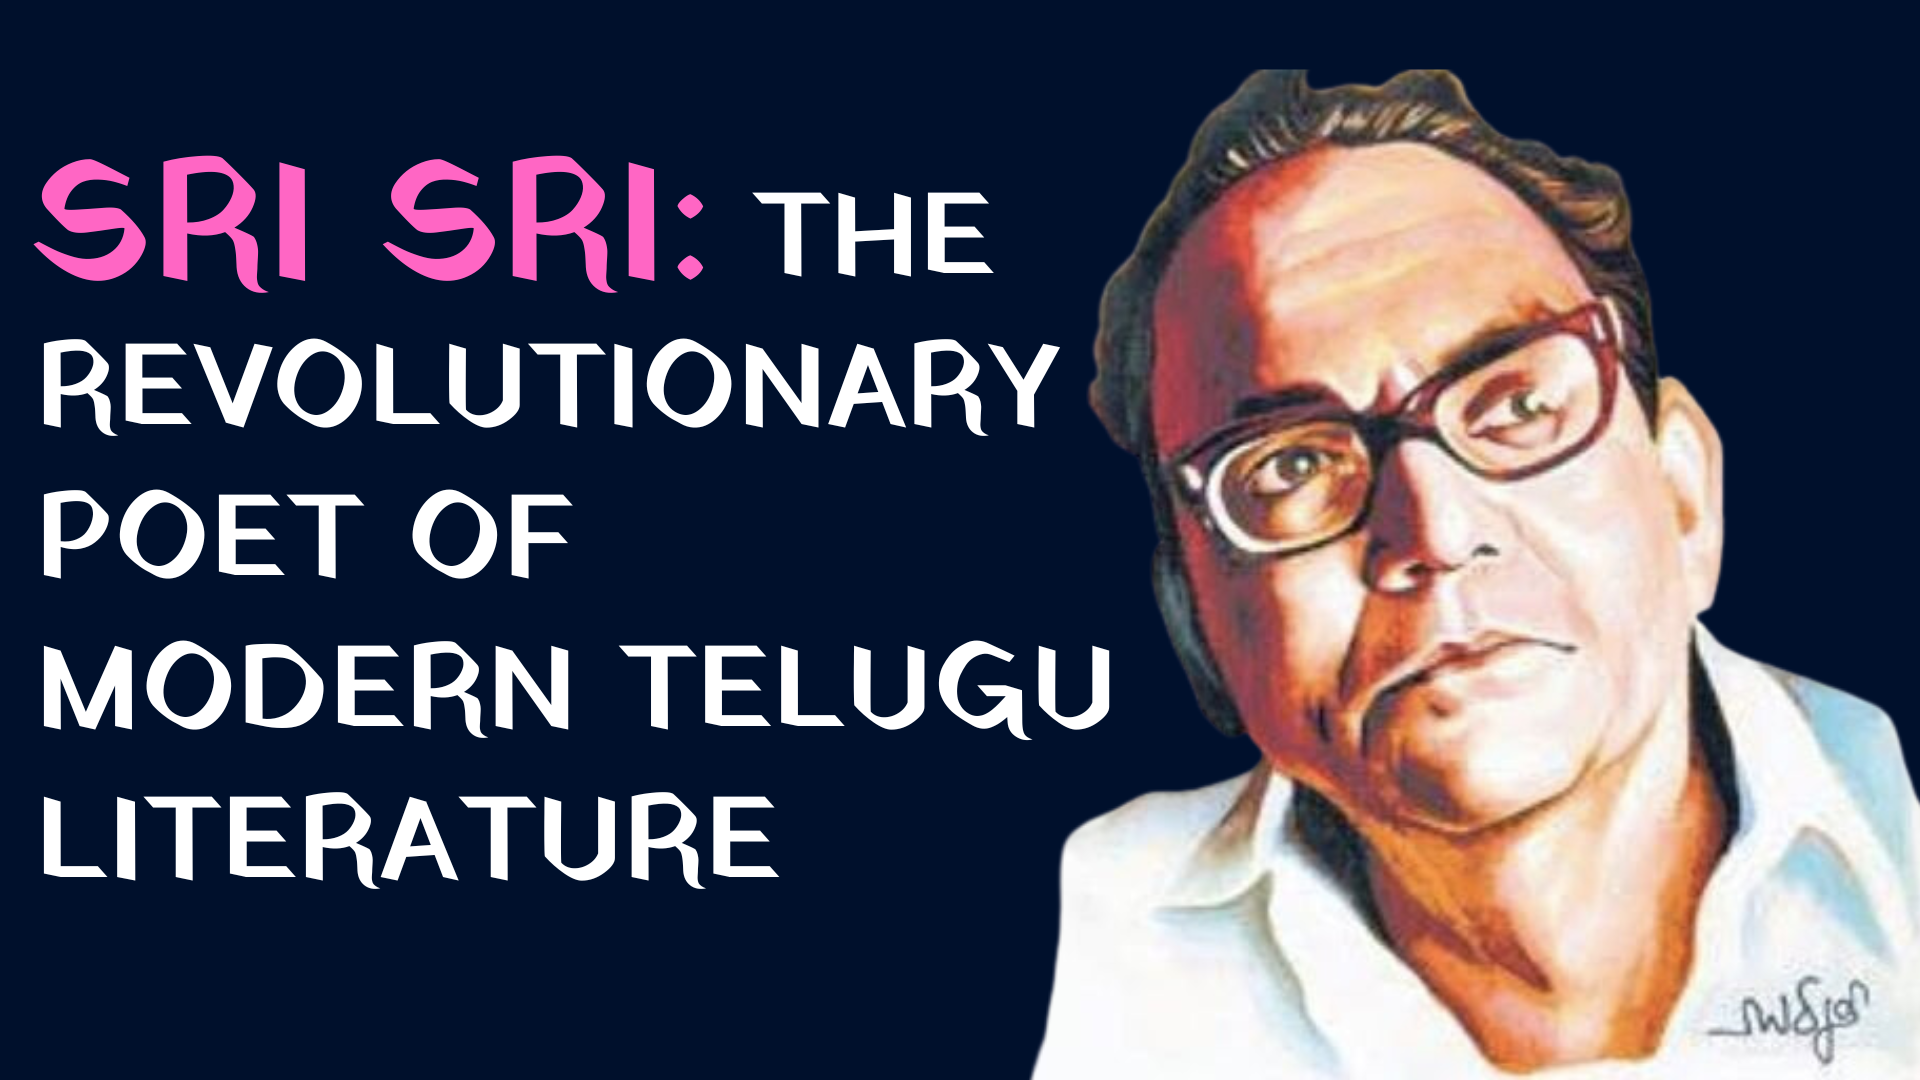 Sri Sri: The Revolutionary Poet of Modern Telugu Literature's image